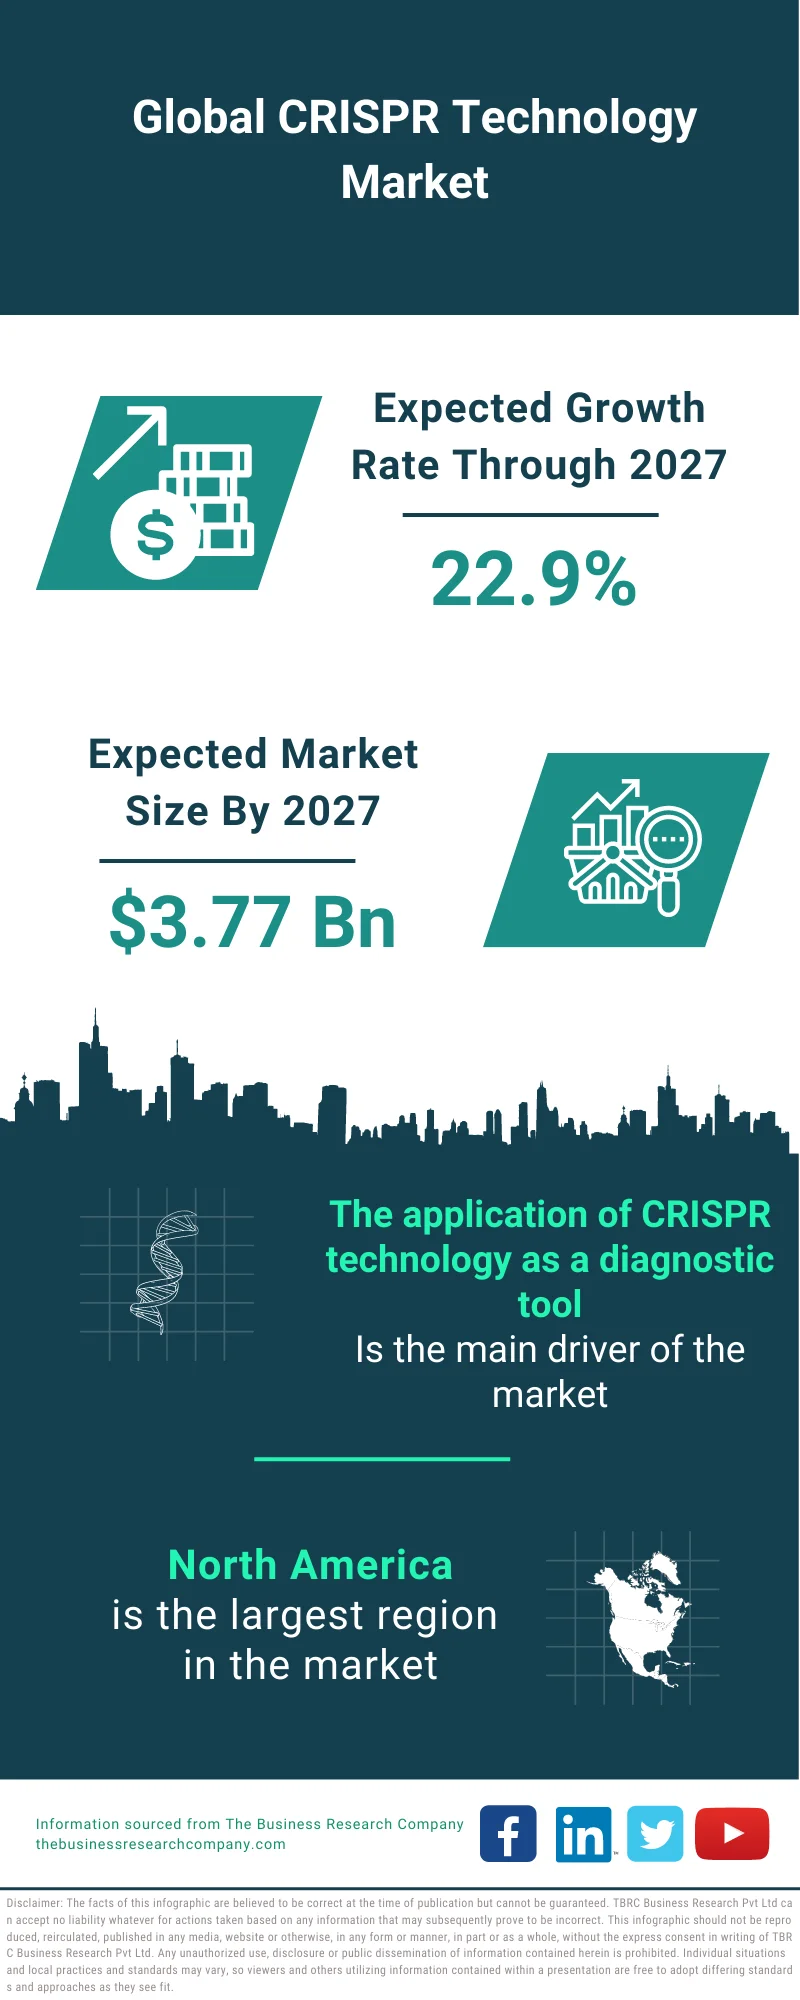 CRISPR Technology Market